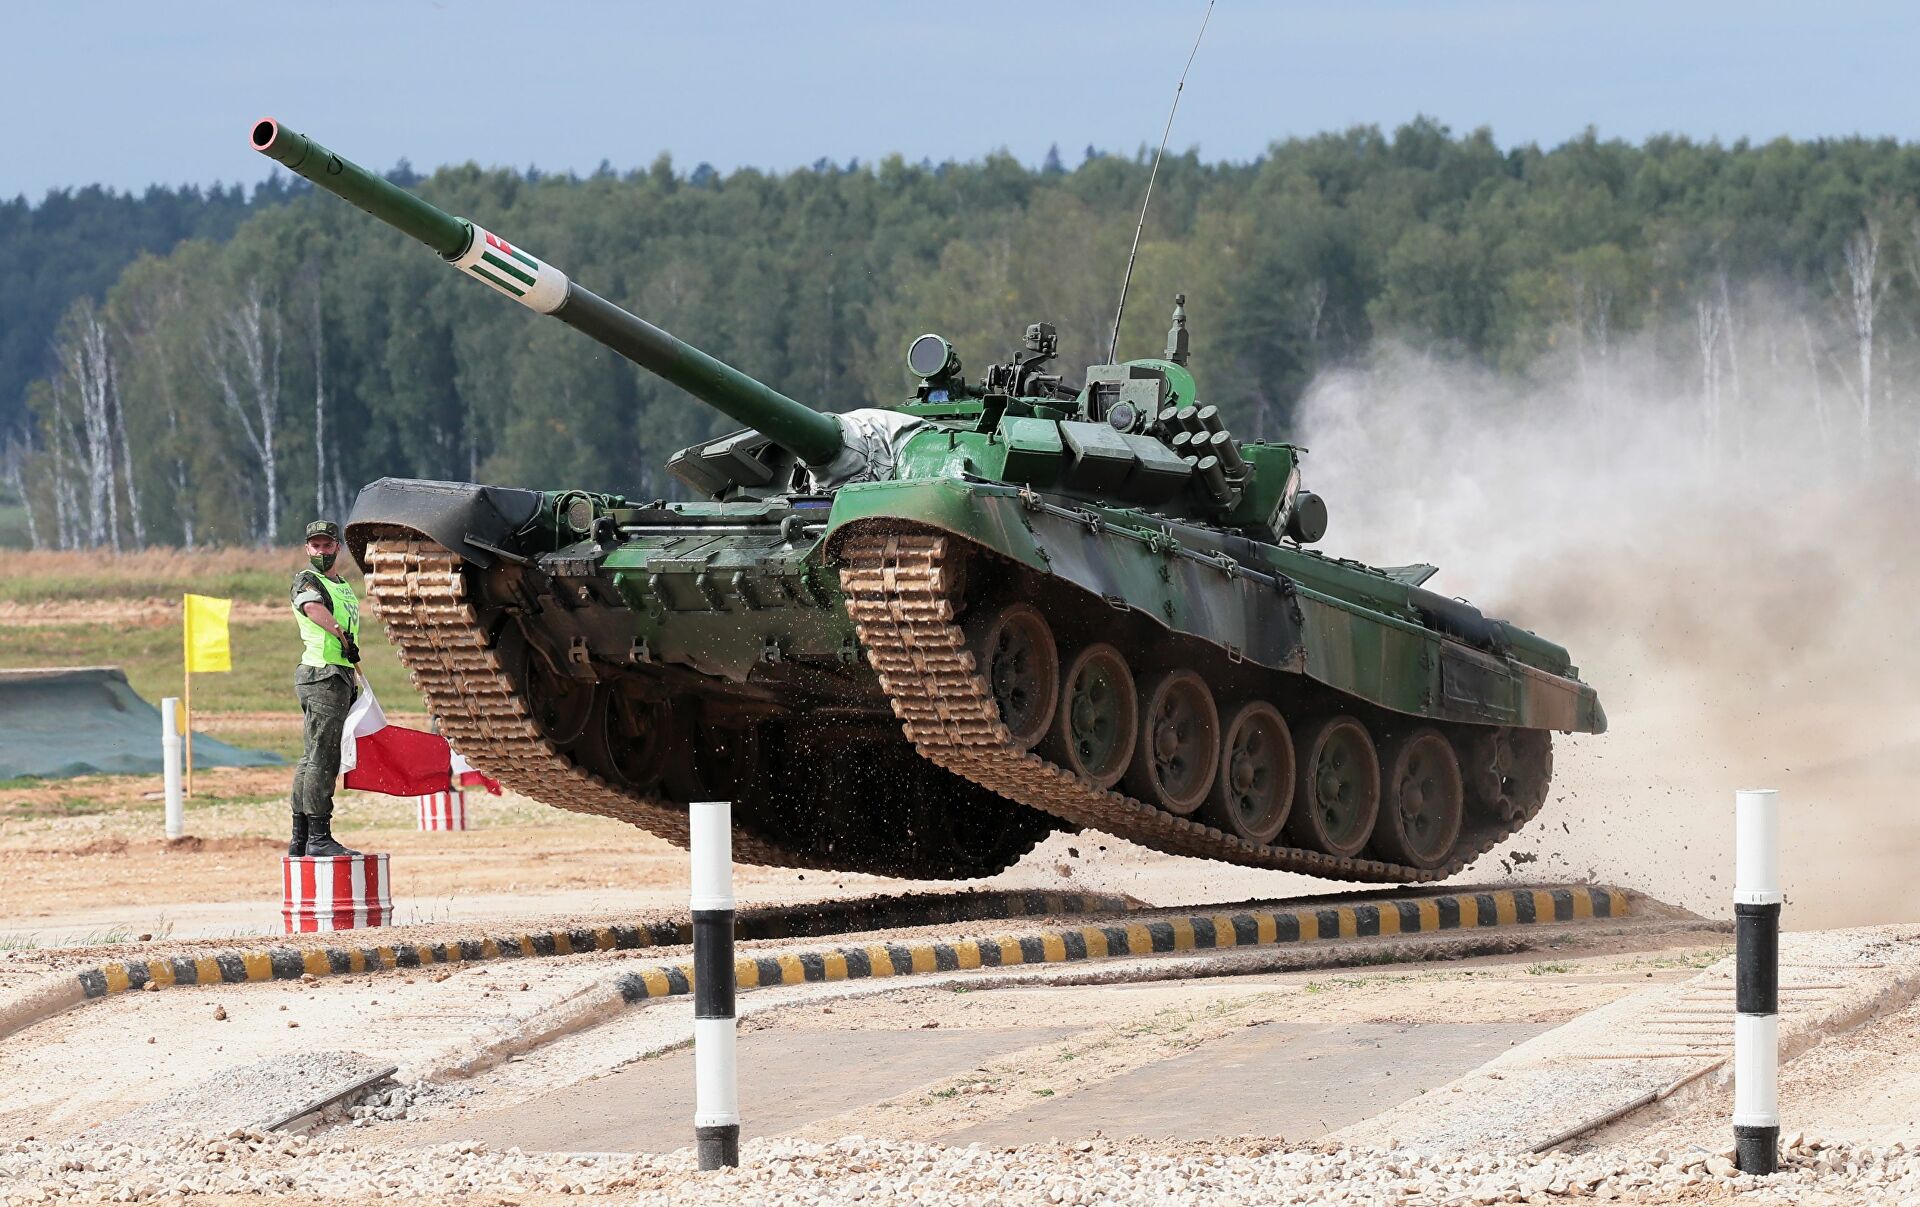 Tank biathlon